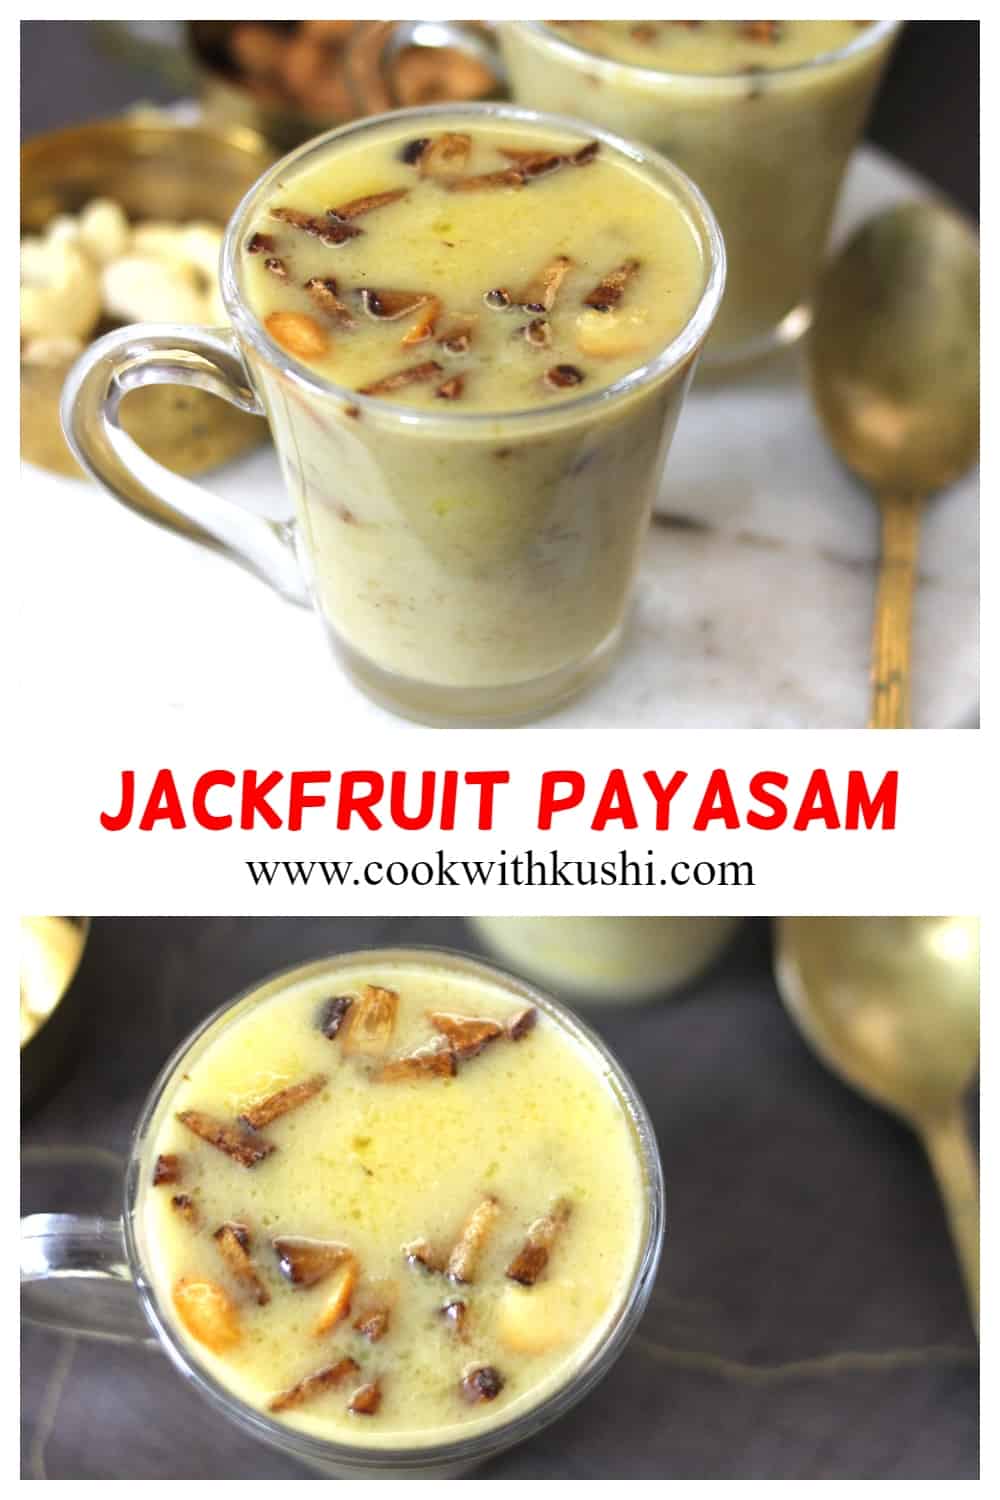 2 images of jackfruit payasam or kheer